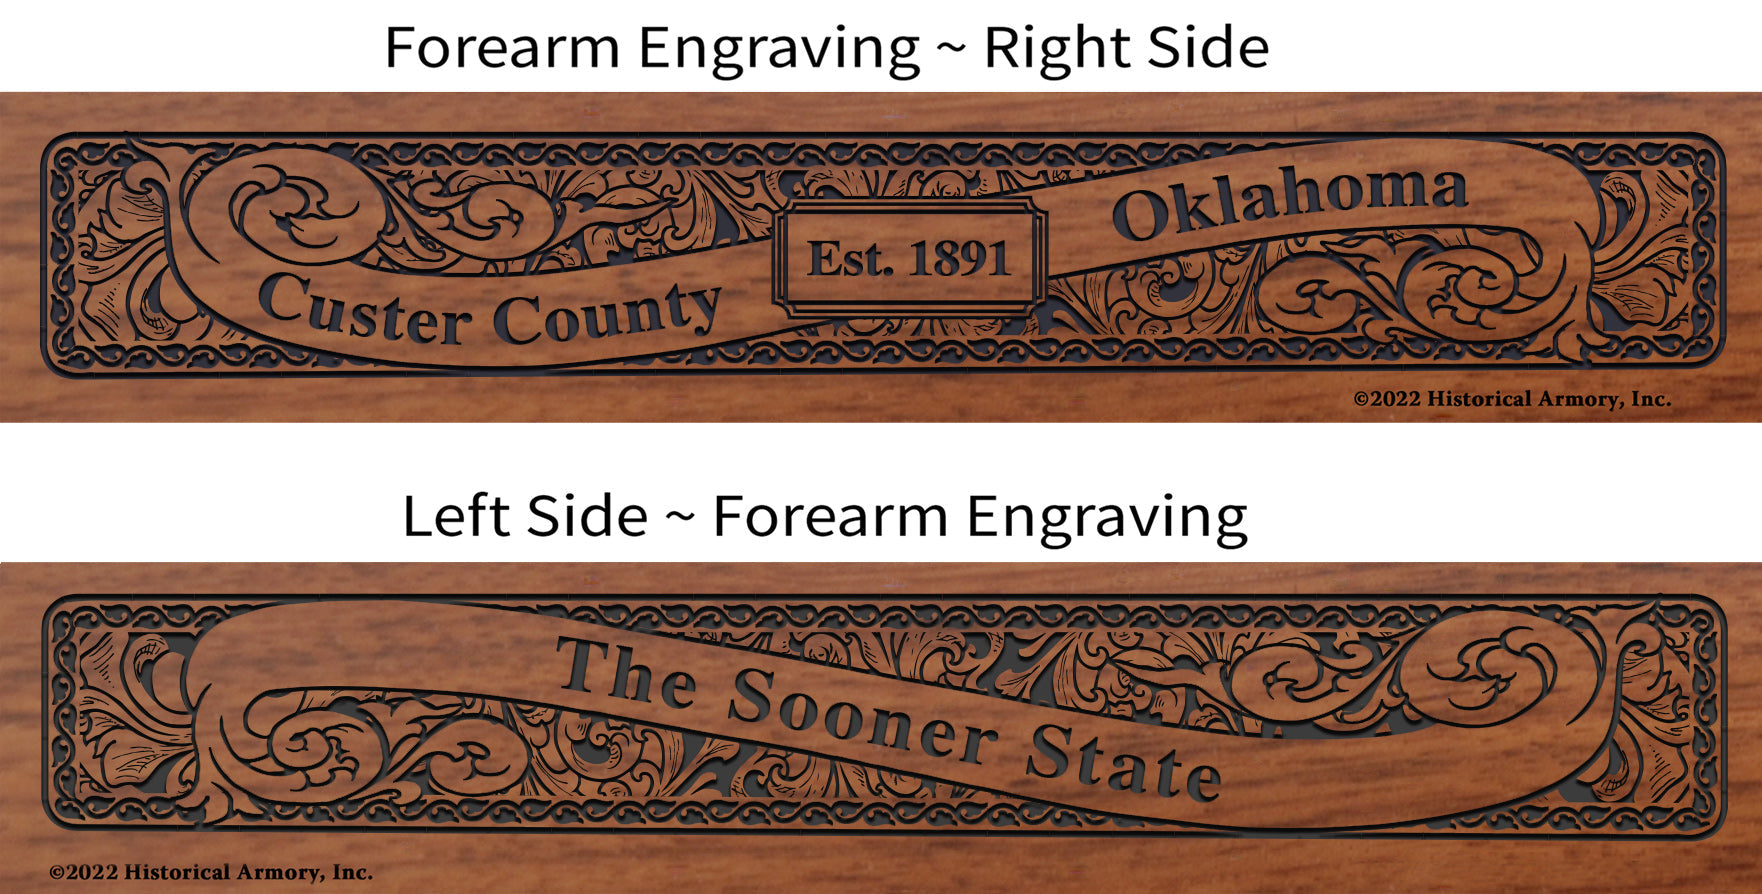 Custer County Oklahoma Engraved Rifle Forearm